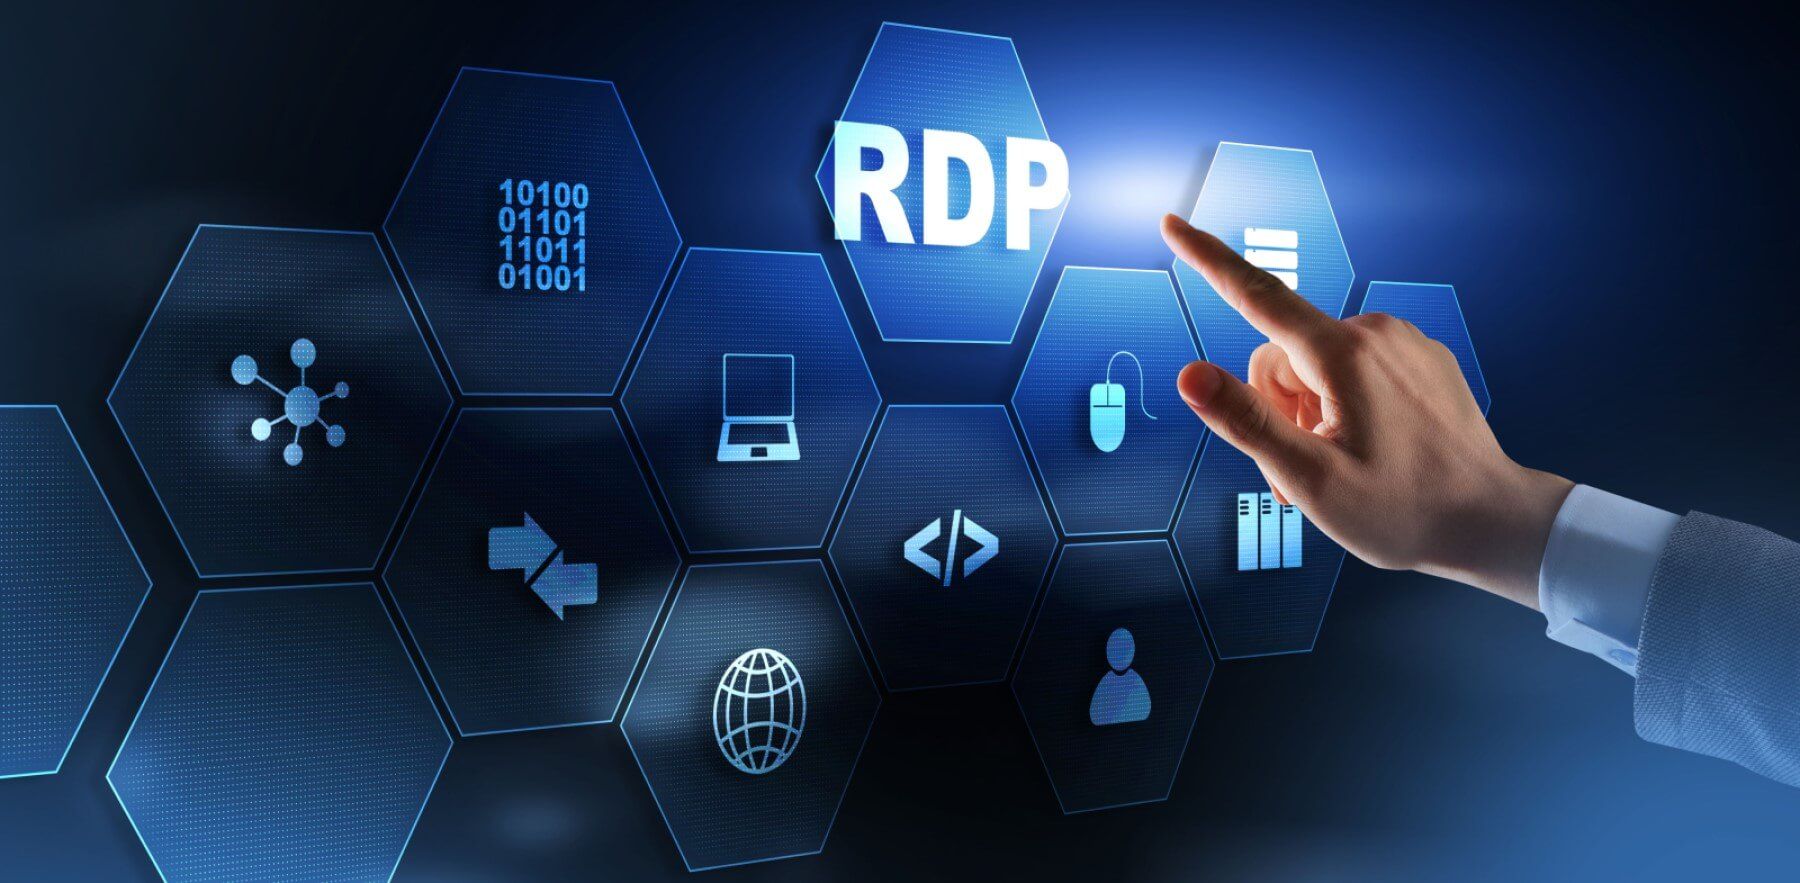 RDP - Remote Desktop Protocol